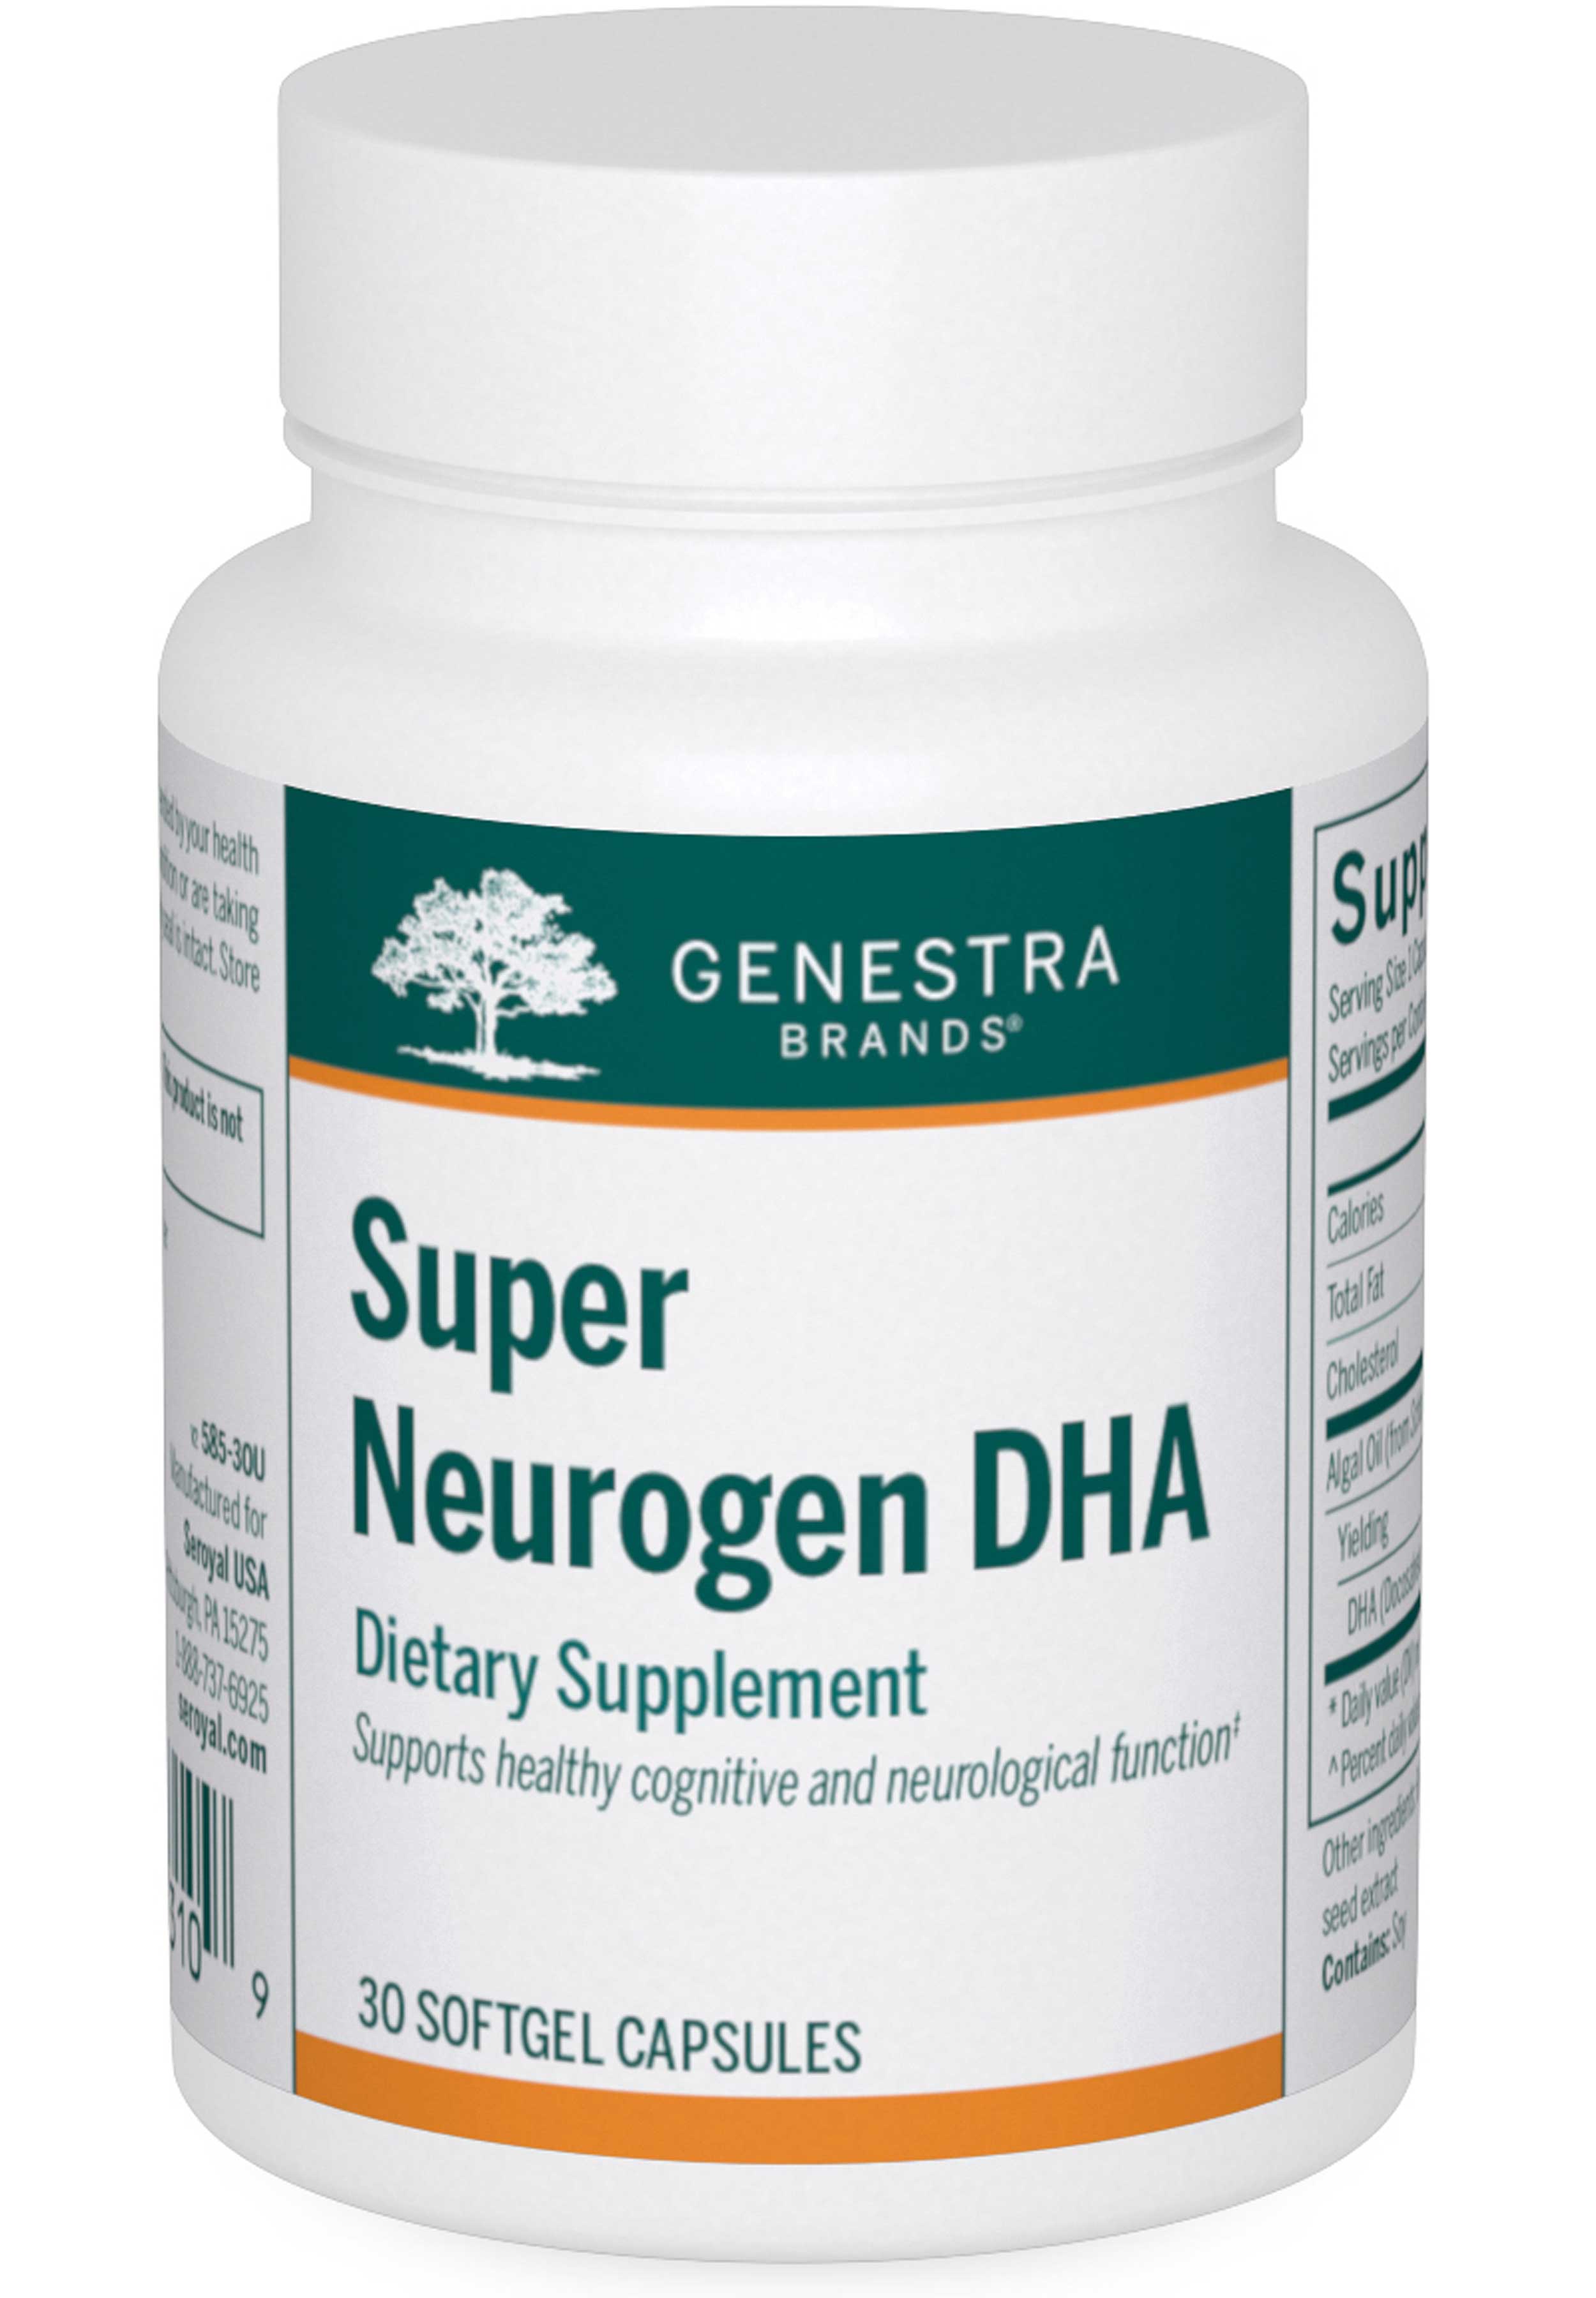 Genestra Brands Super Neurogen DHA